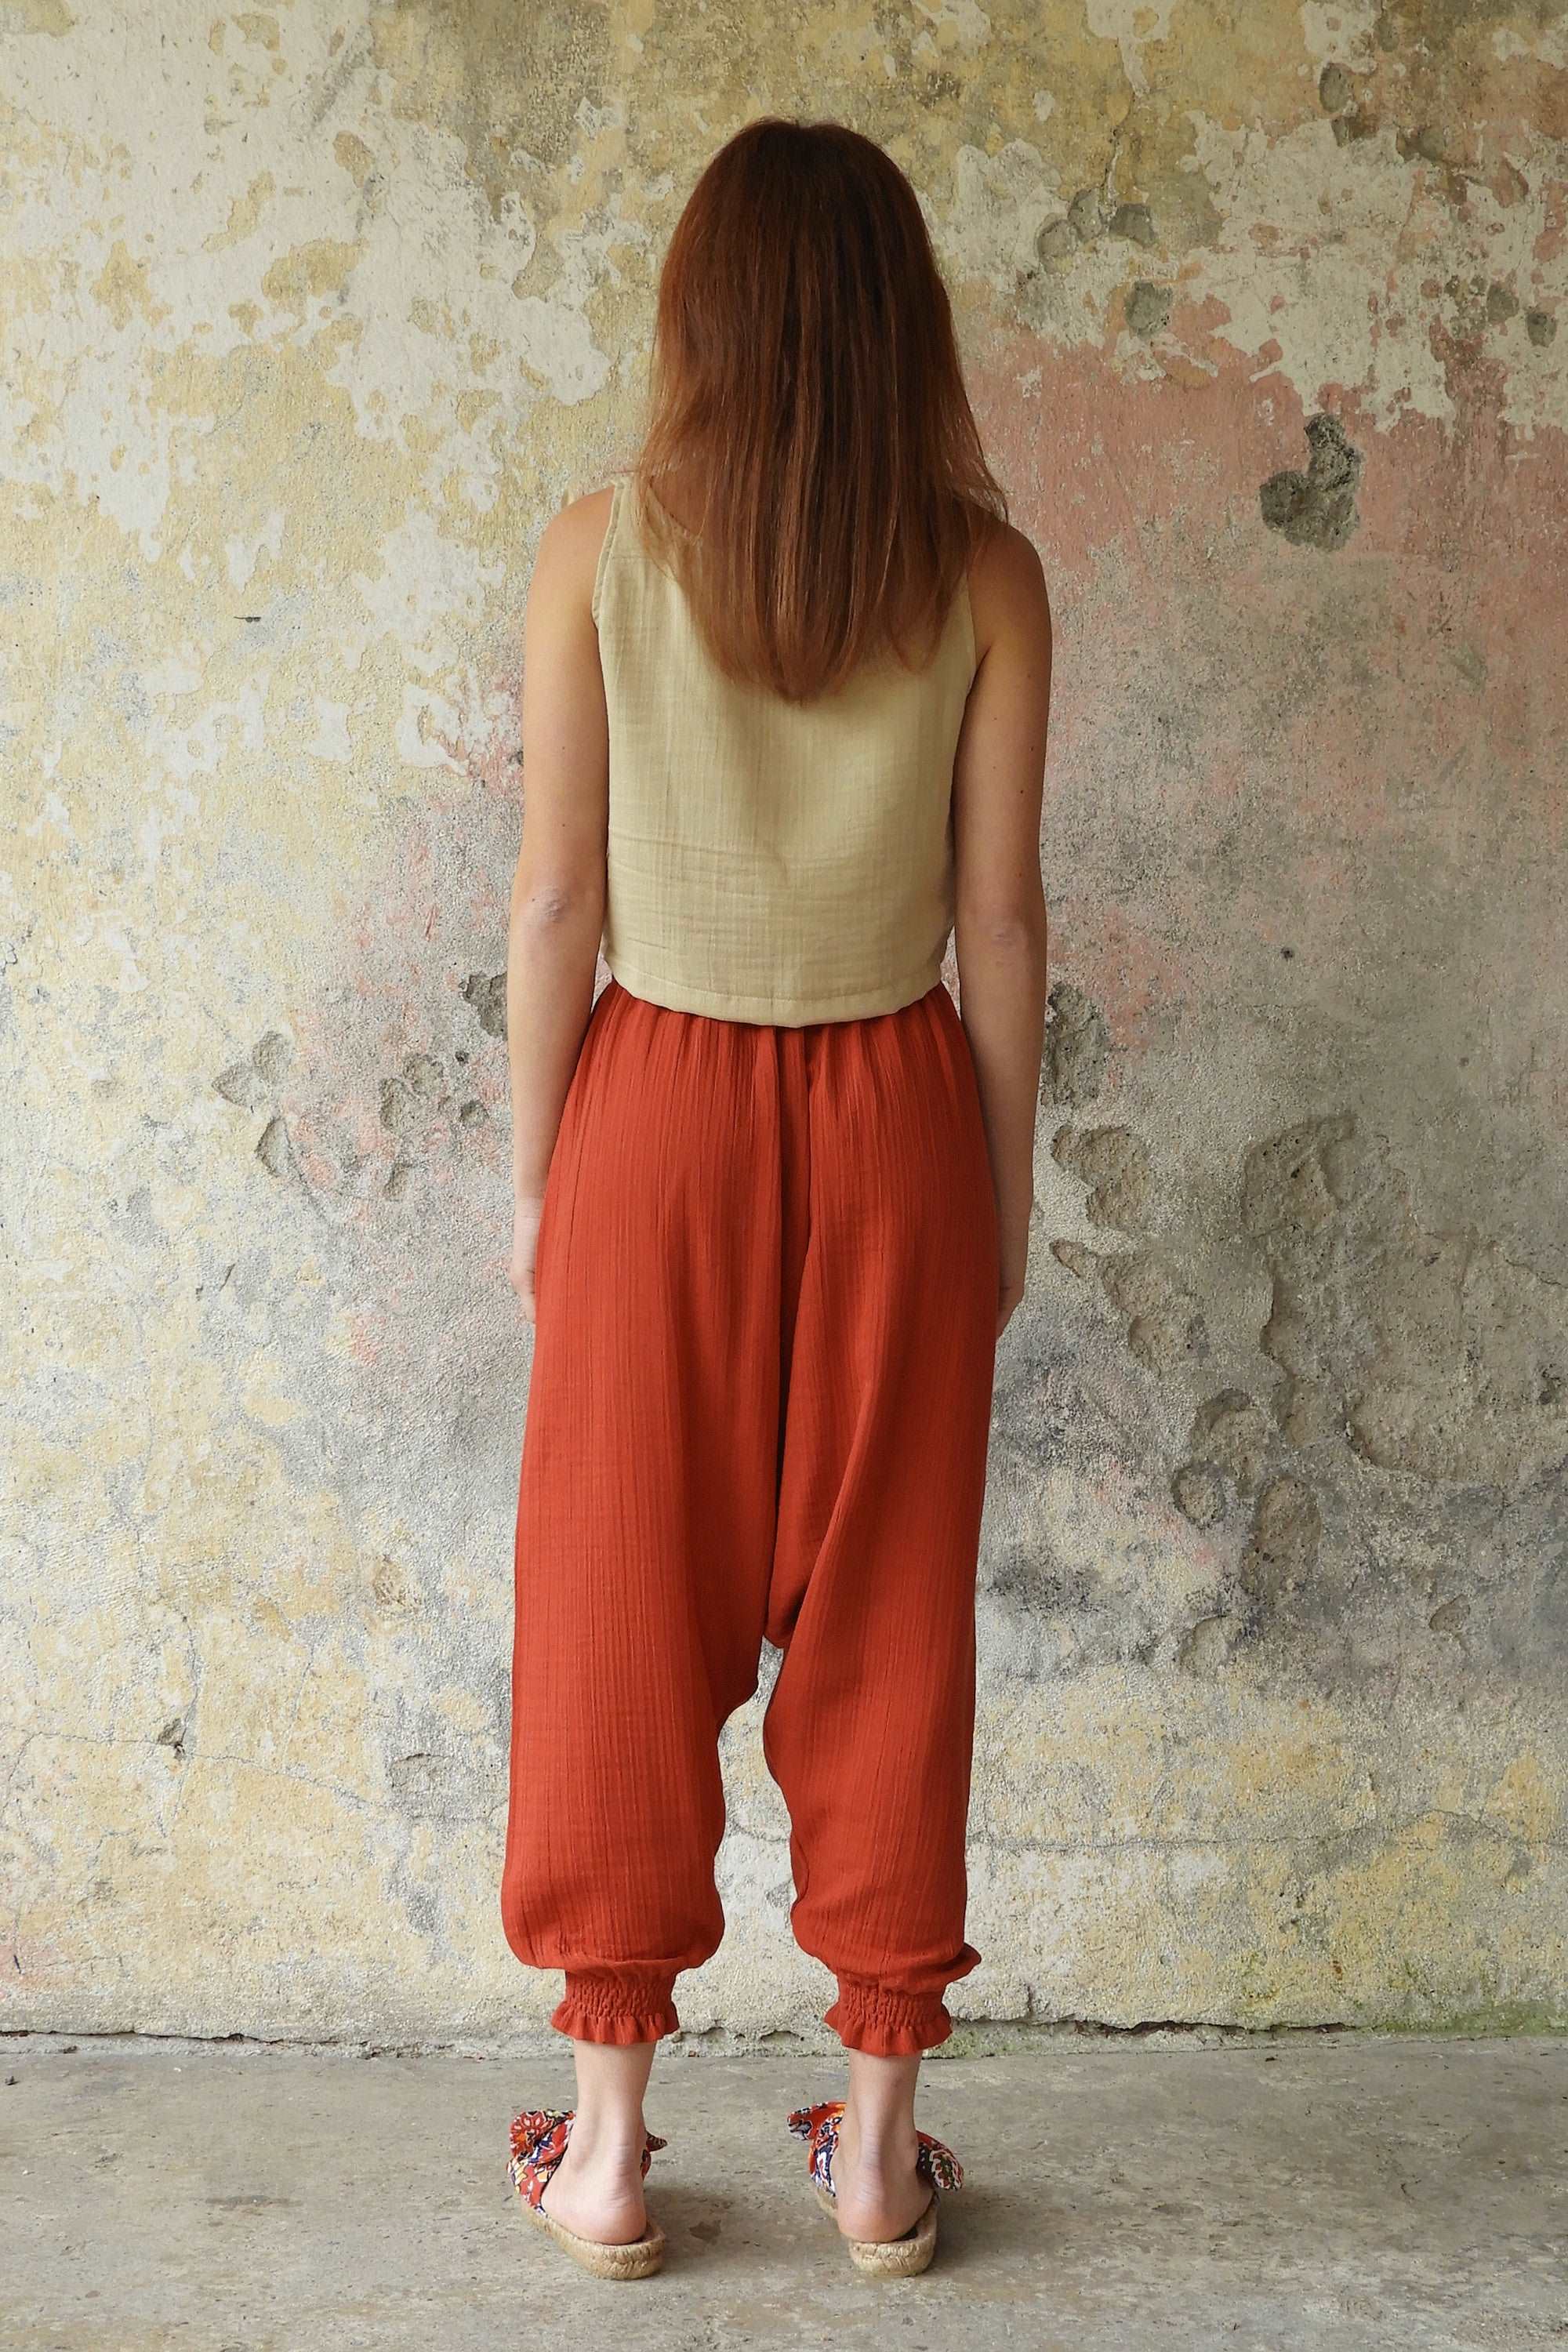 Sustainable  | GAIA Women's Gauze Cotton Harem Pants (Red, Terra Cotta, Caramel) by Odana's